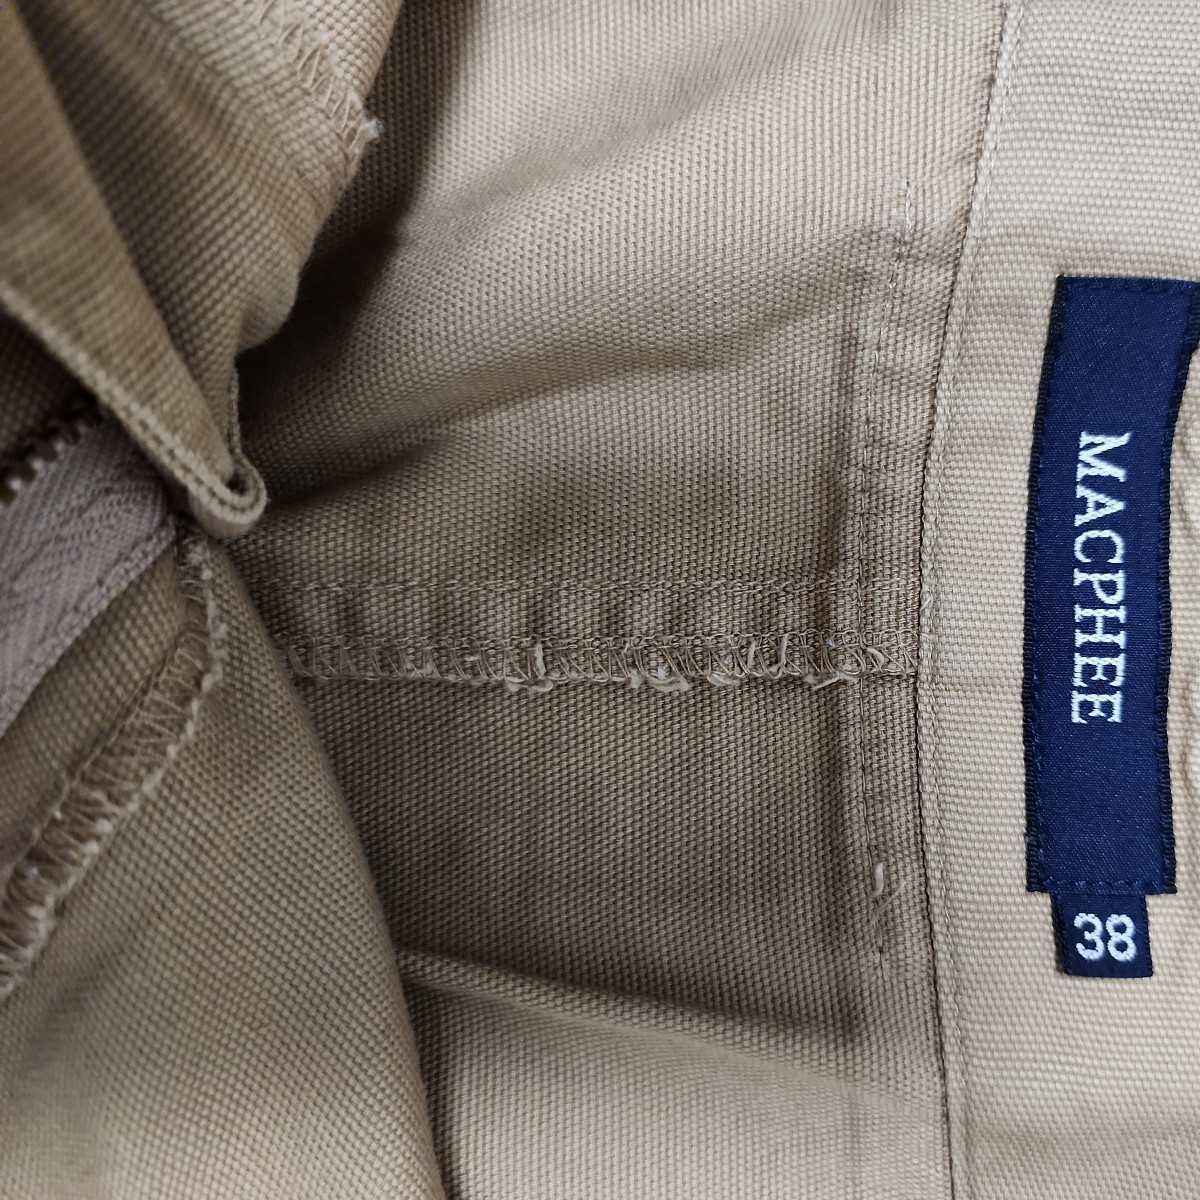  Tomorrowland McAfee узкая юбка размер 38